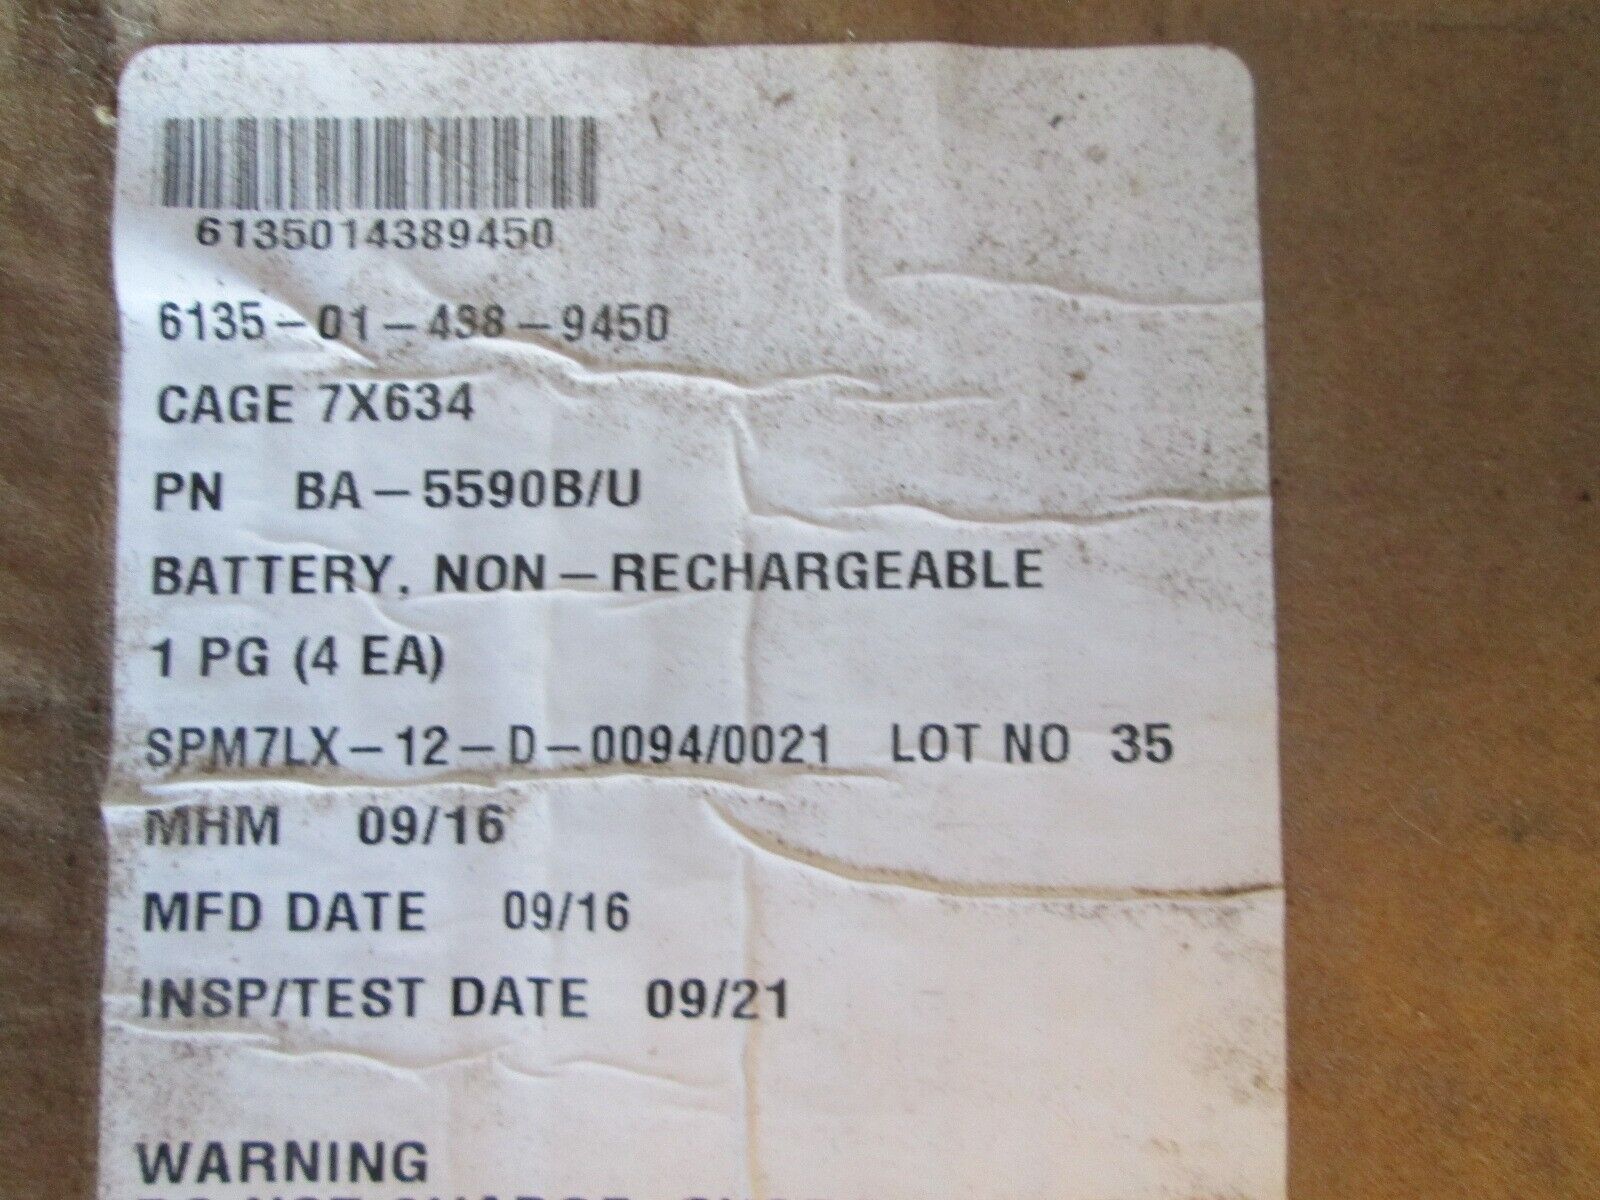 1 Case of 16 BA-5590B/U Lithium Sulfur Dioxide Batteries, mfg 16' *BLOWOUT SALE*